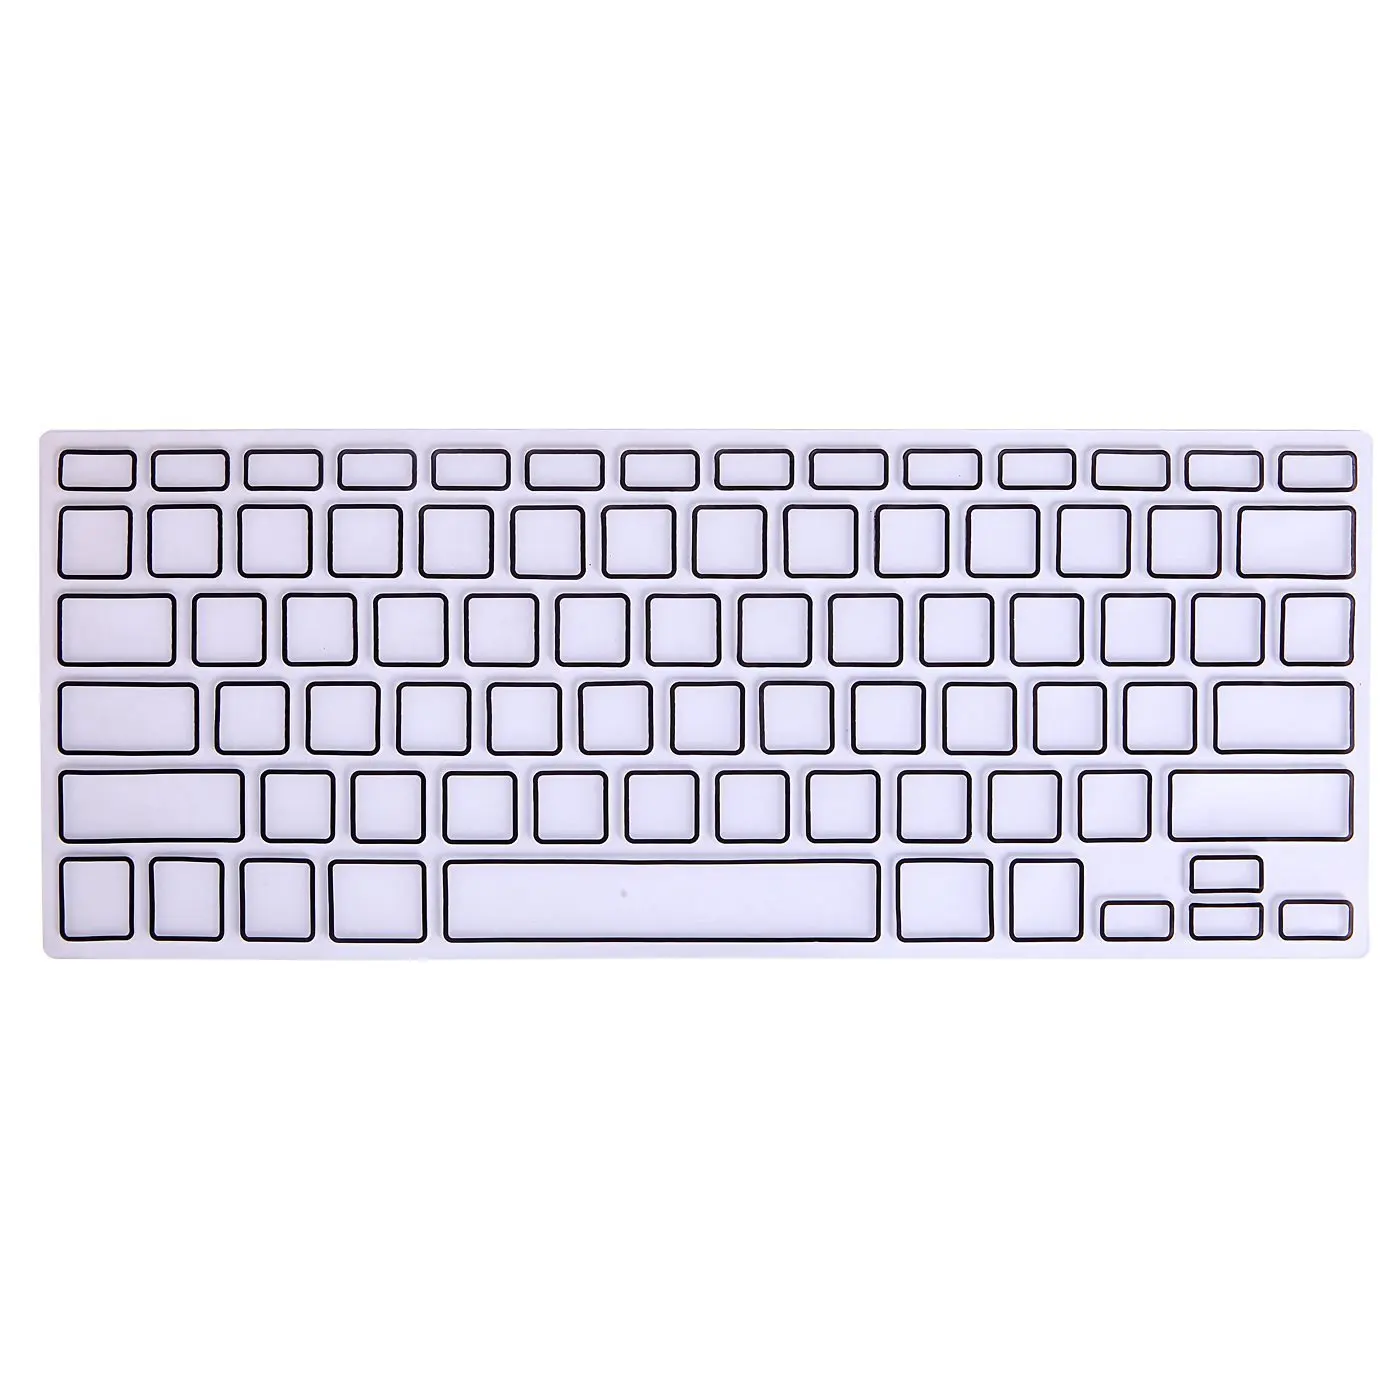 MACBOOK Air клавиатура раскраска